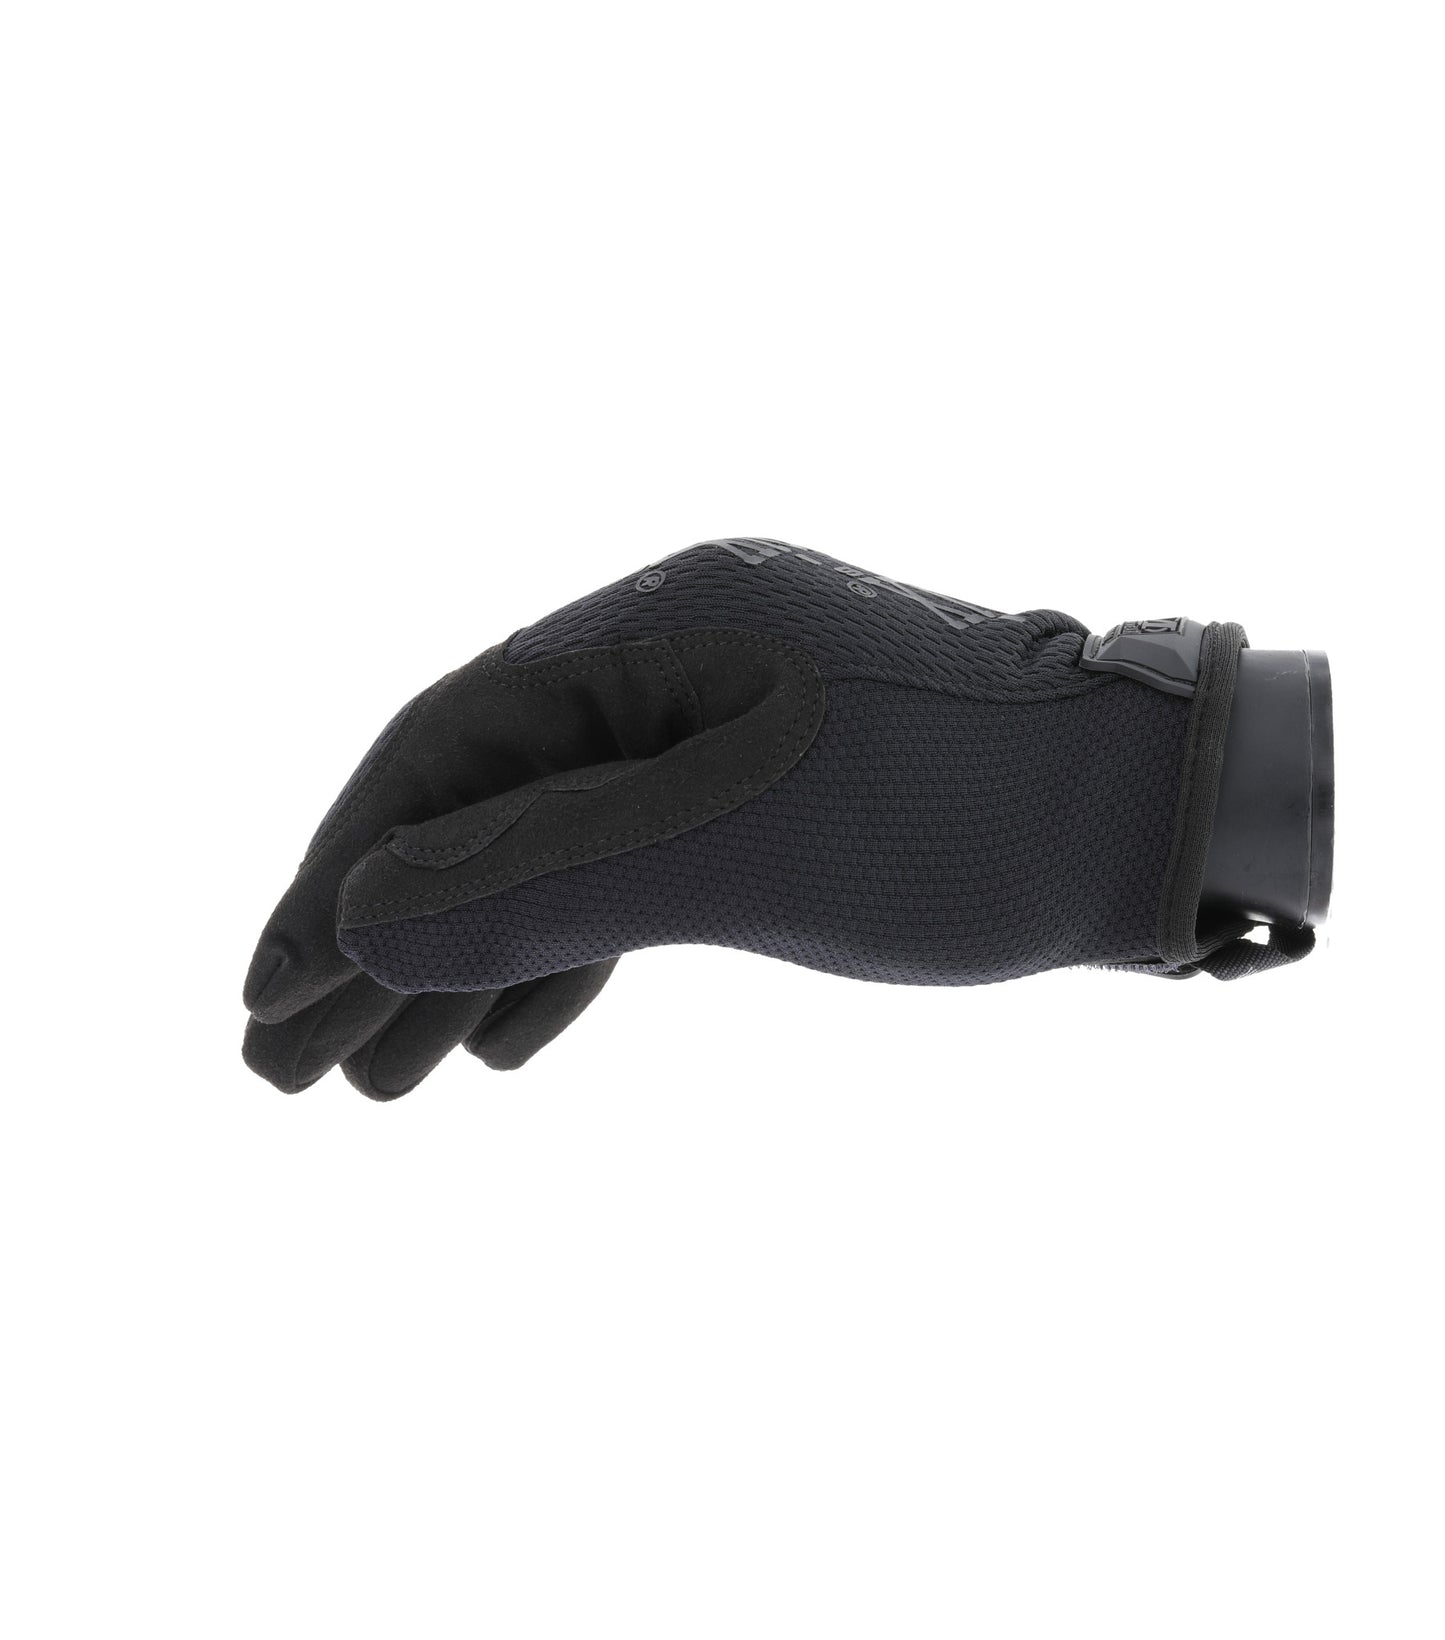 The Original Covert Glove